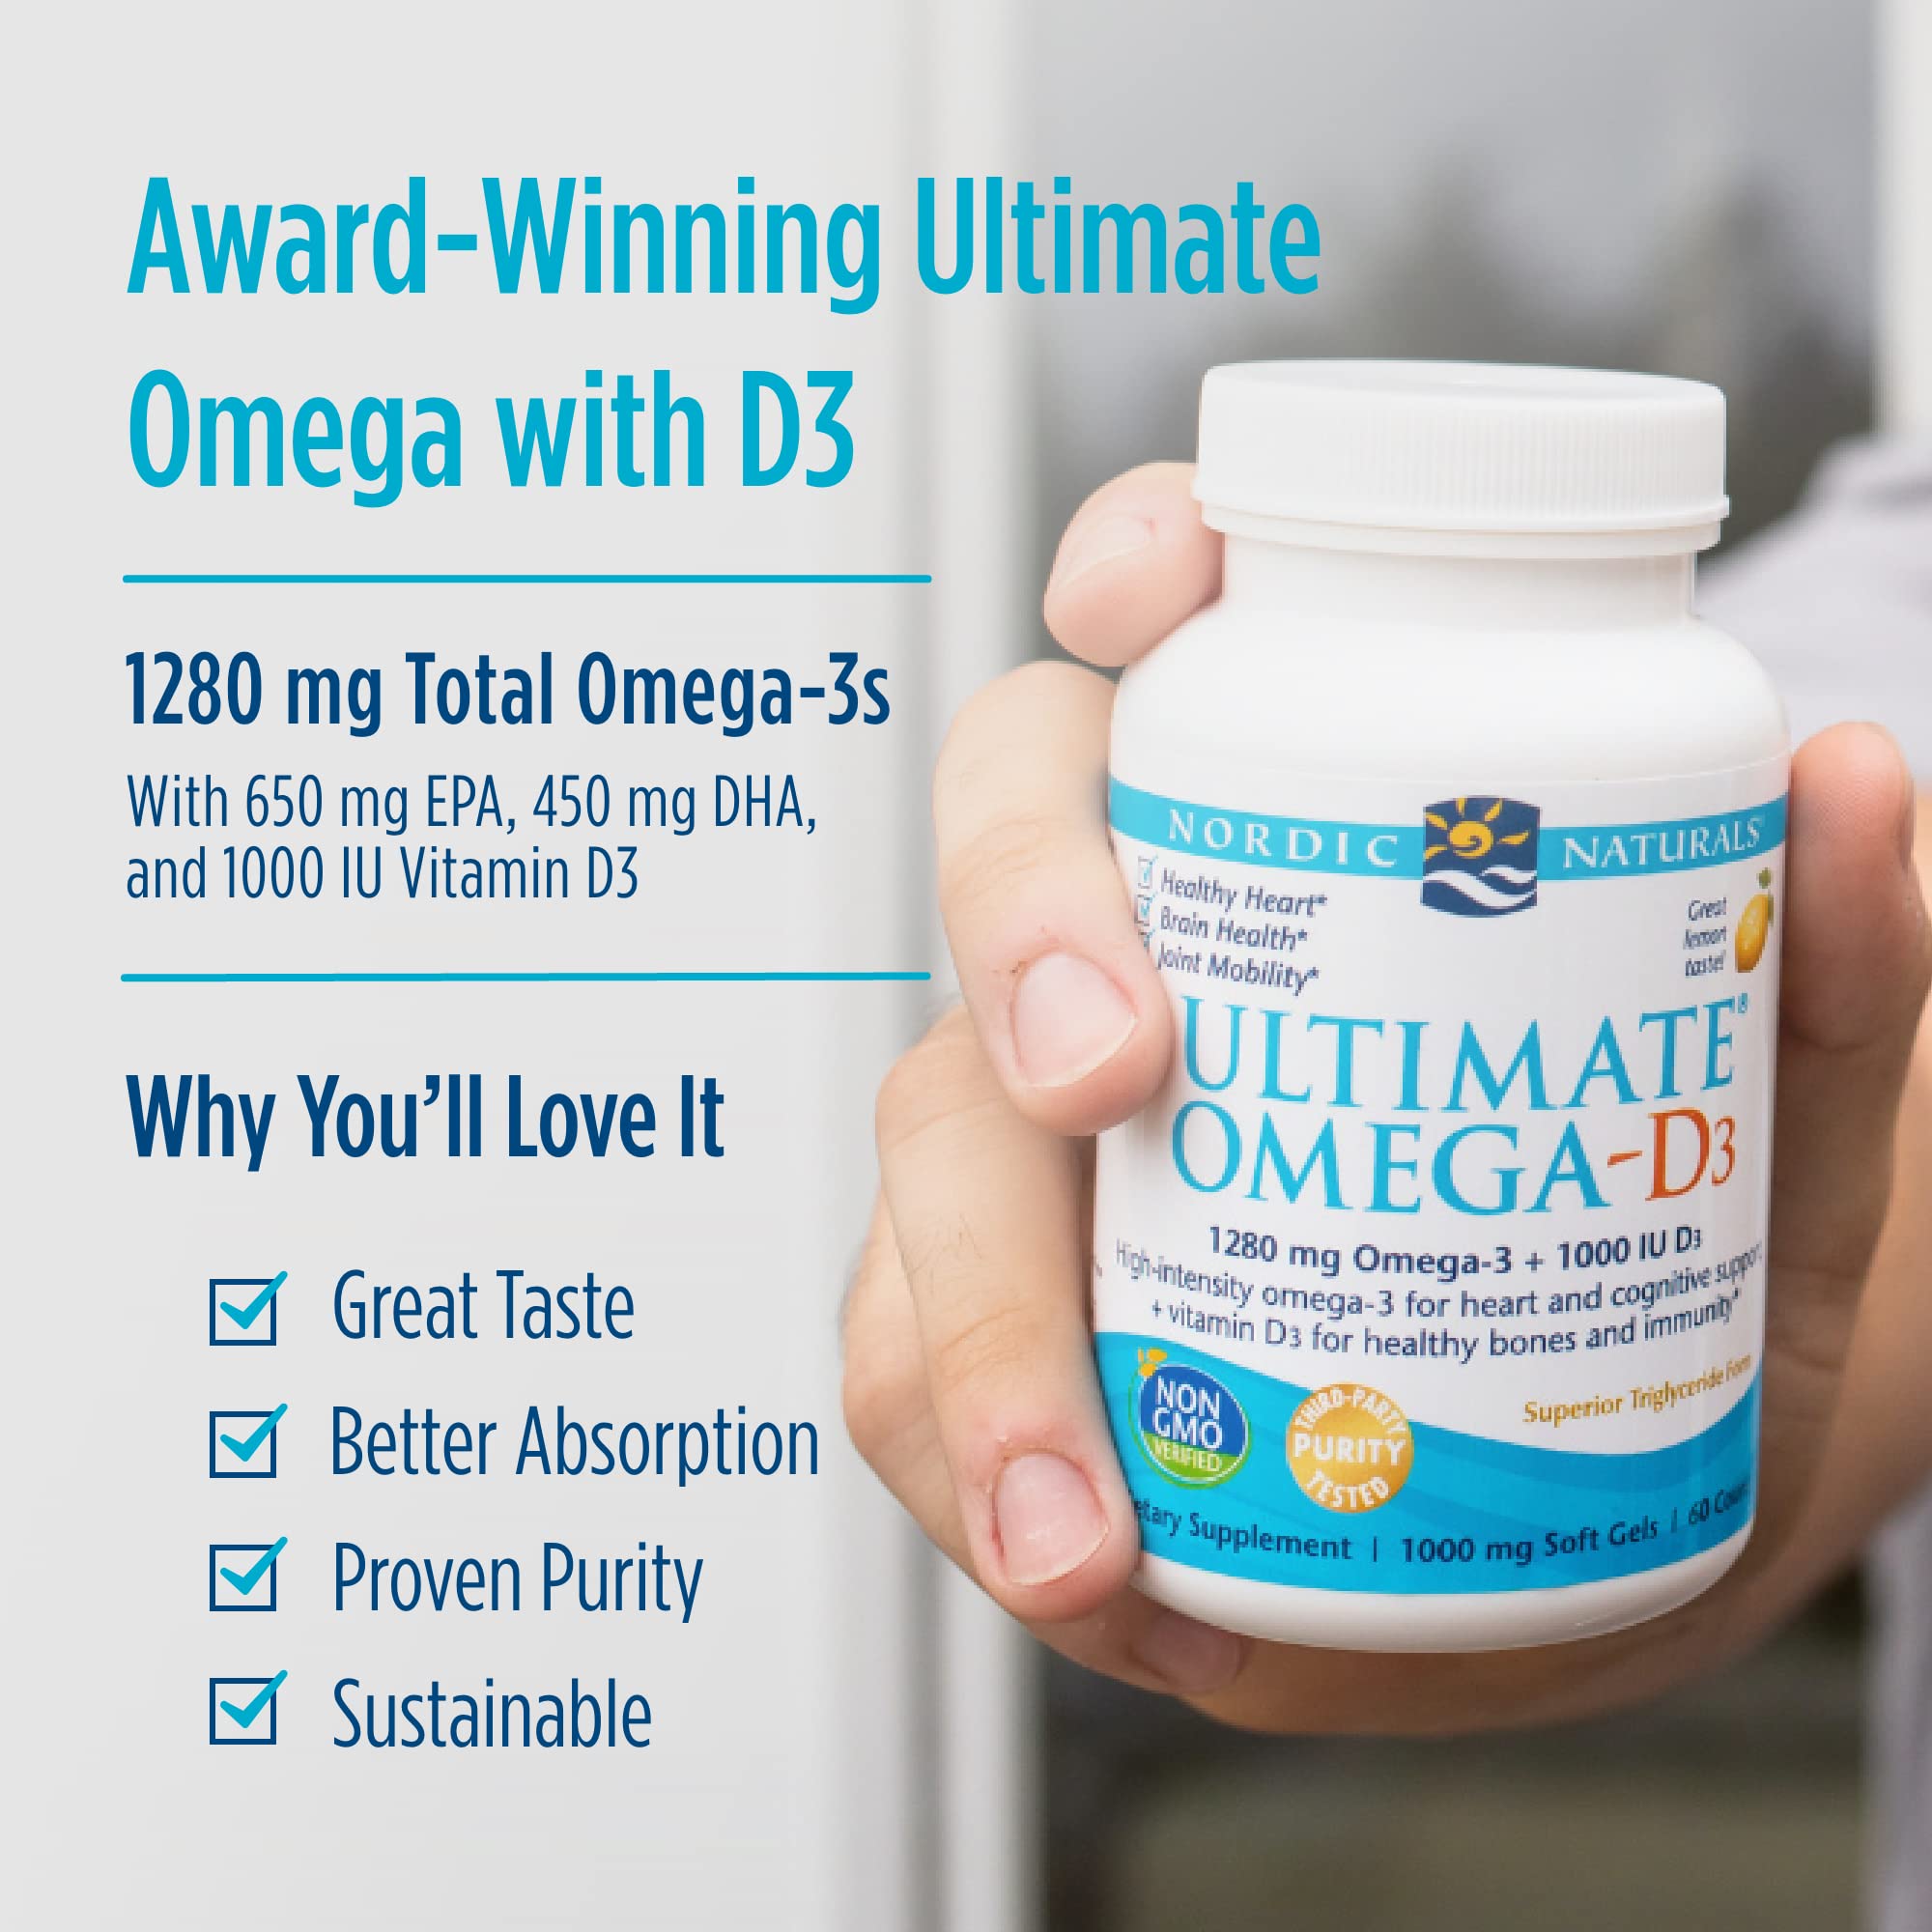 Nordic Naturals Ultimate Omega-D3, Lemon Flavor - 1280 mg Omega-3 + 1000 IU Vitamin D3 - 120 Soft Gels - Omega-3 Fish Oil - EPA & DHA - Promotes Brain, Heart, Joint, & Immune Health - 60 Servings